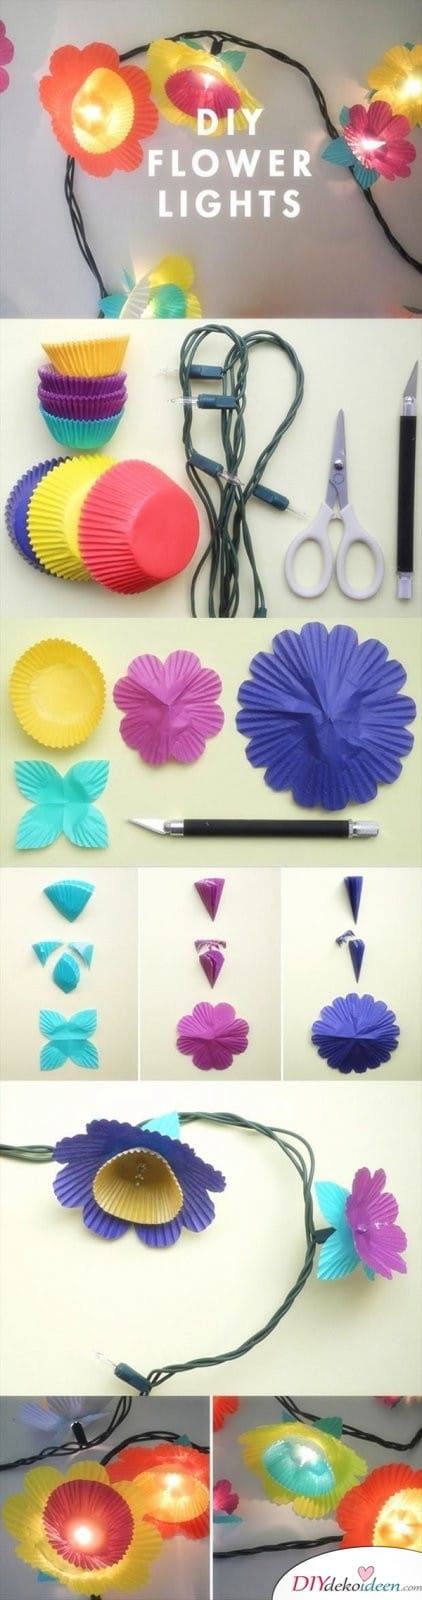 15 Bastelideen DIY Lampen selber machen - DIY Blumenlichterkette 